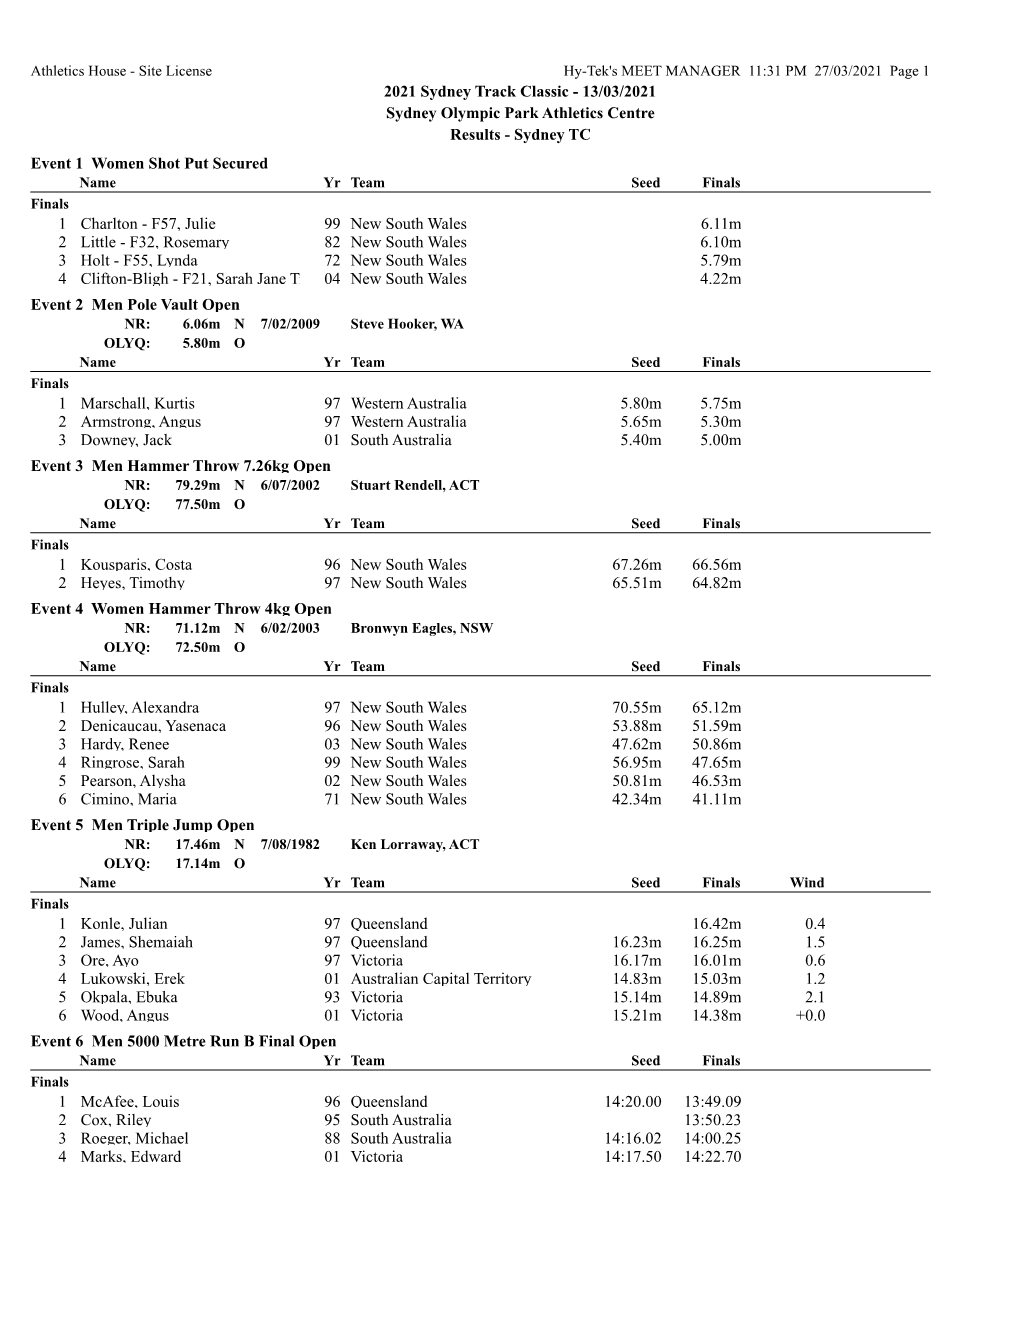 2021 Sydney Track Classic - 13/03/2021 Sydney Olympic Park Athletics Centre Results - Sydney TC